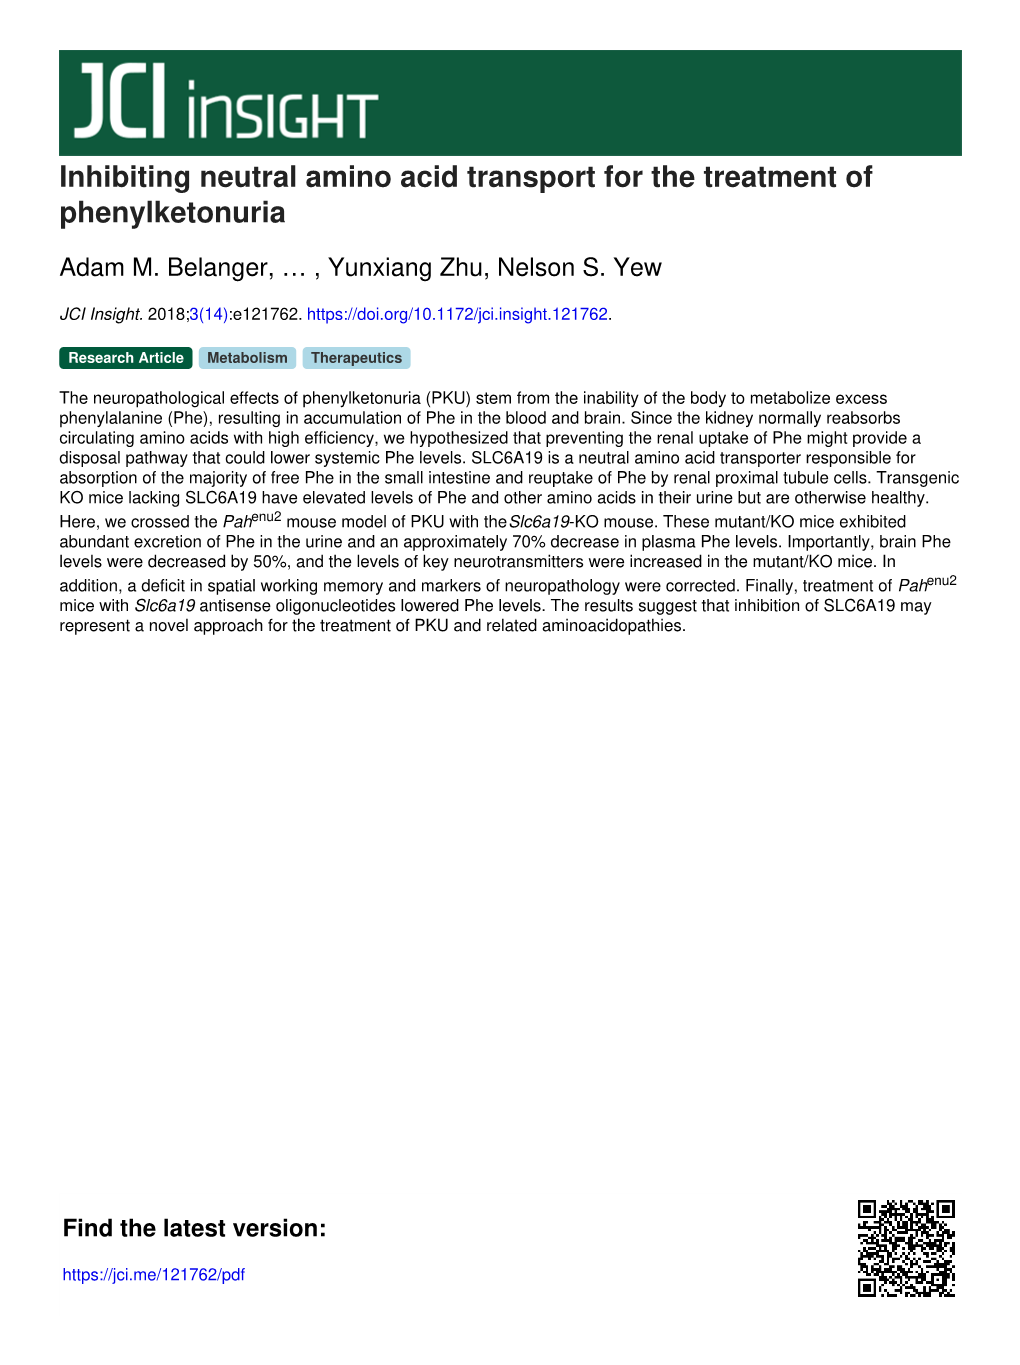 Inhibiting Neutral Amino Acid Transport for the Treatment of Phenylketonuria